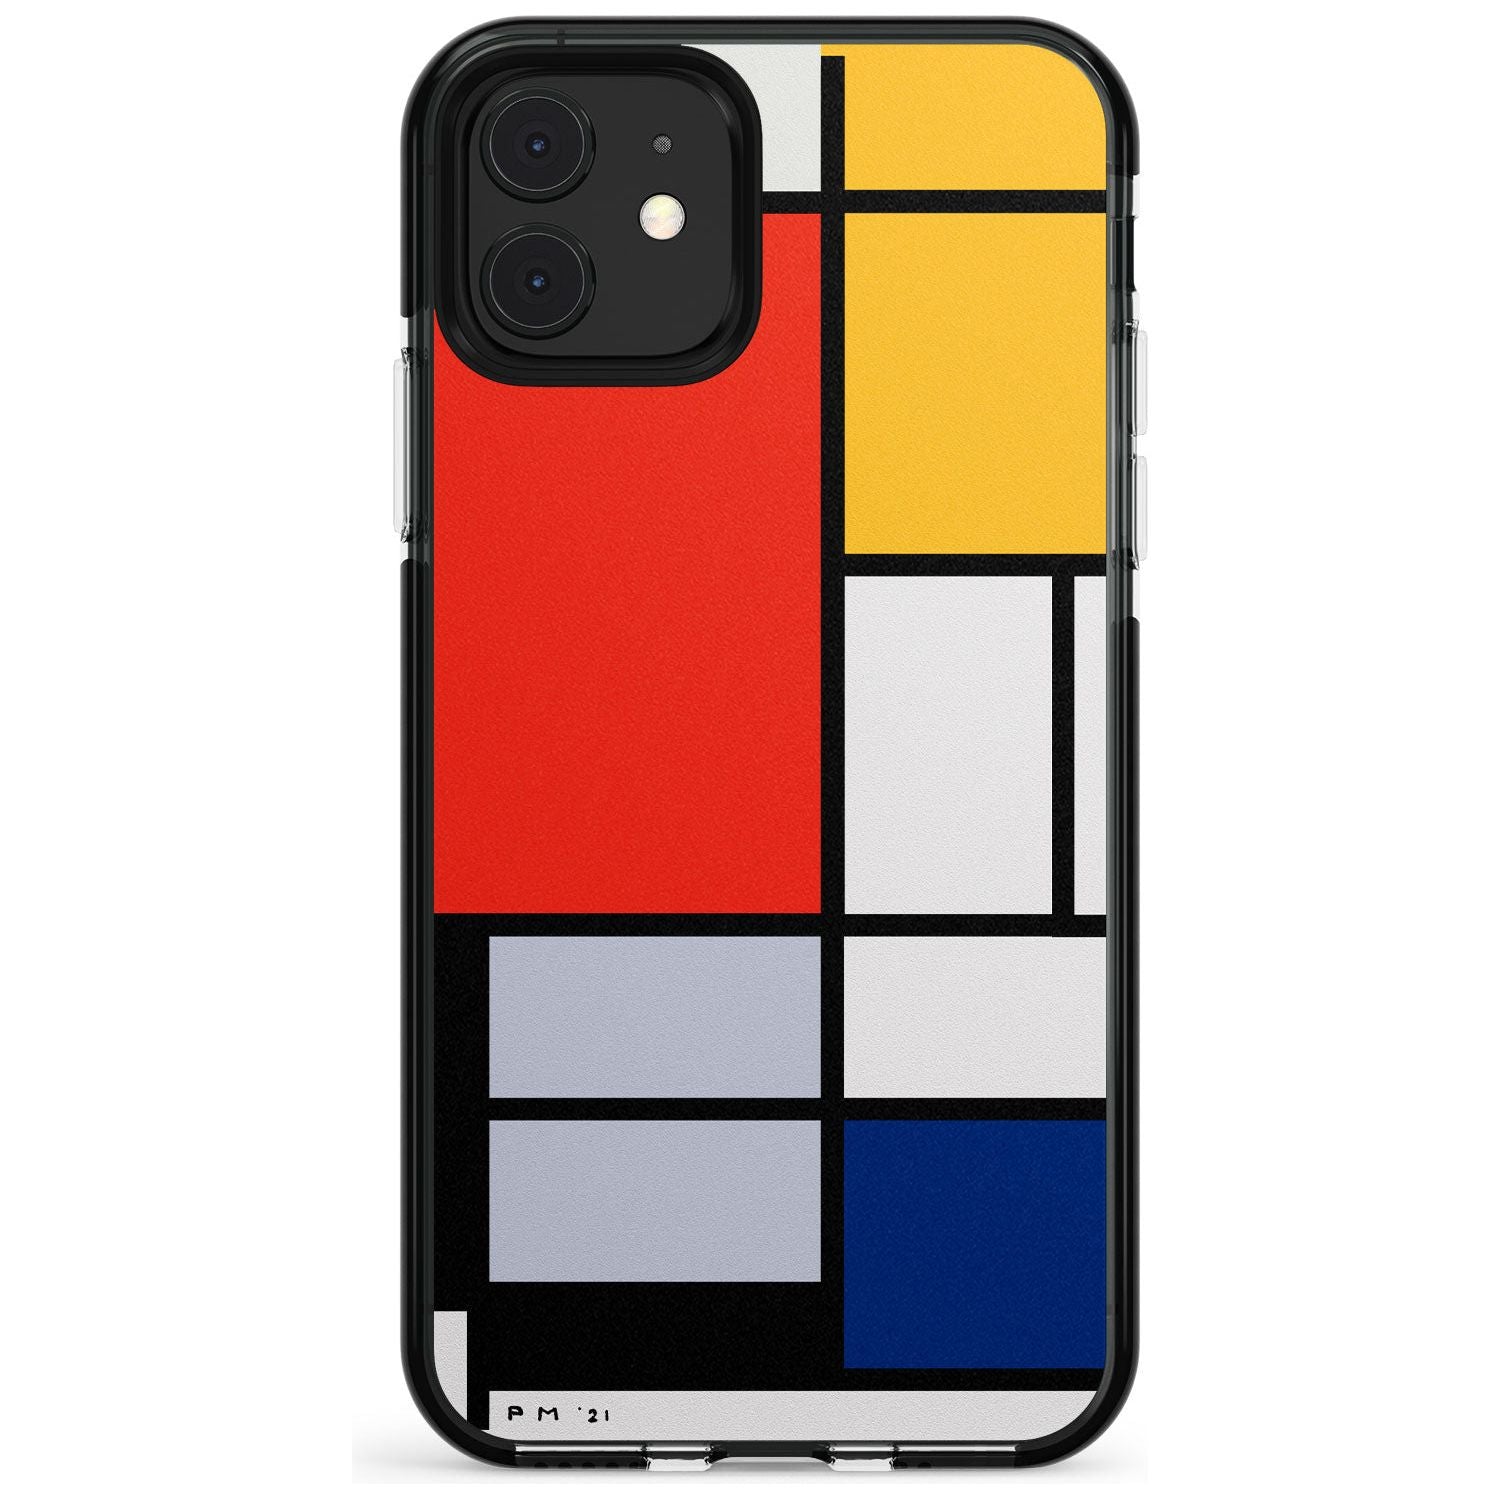 Piet Mondrian's Composition Black Impact Phone Case for iPhone 11 Pro Max